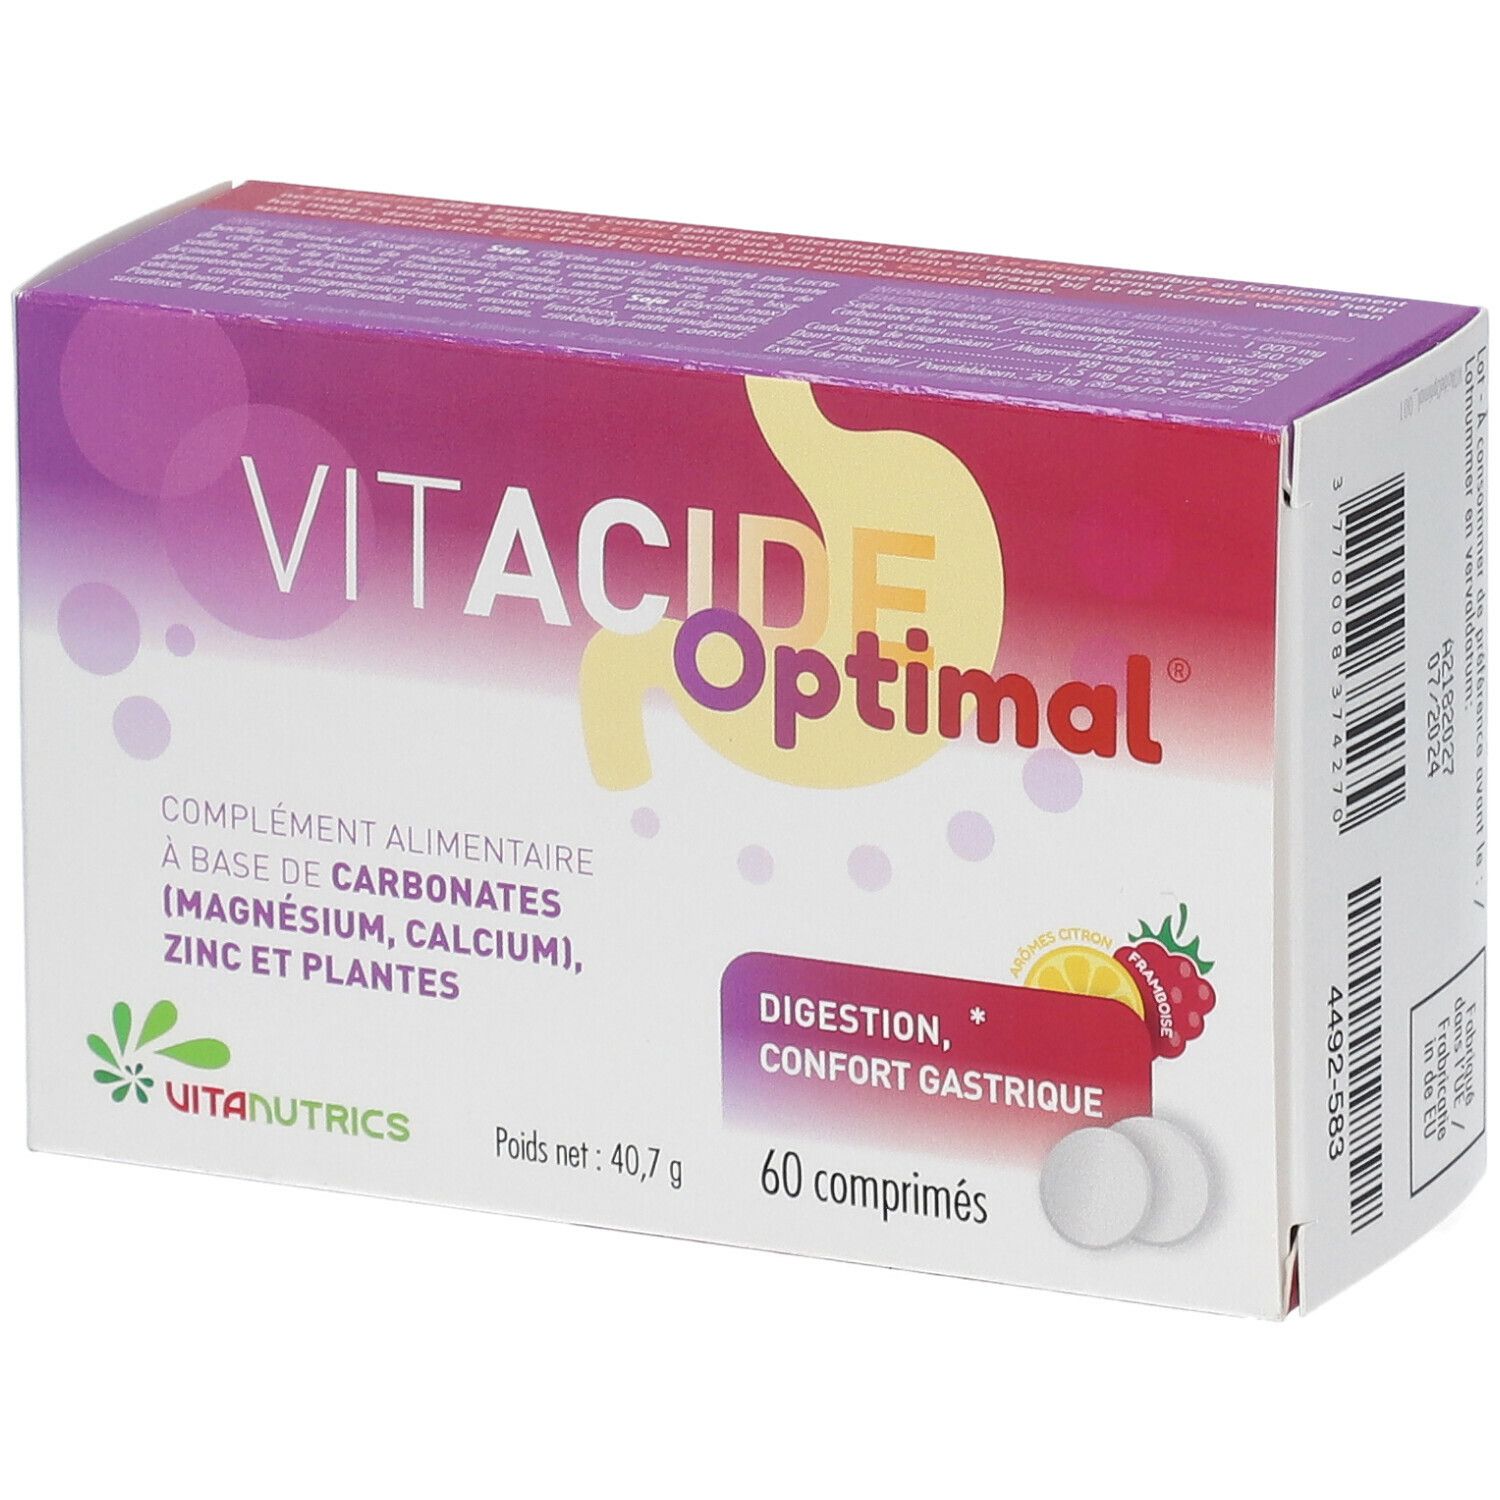 Vitanutrics Vitacide Optimal®